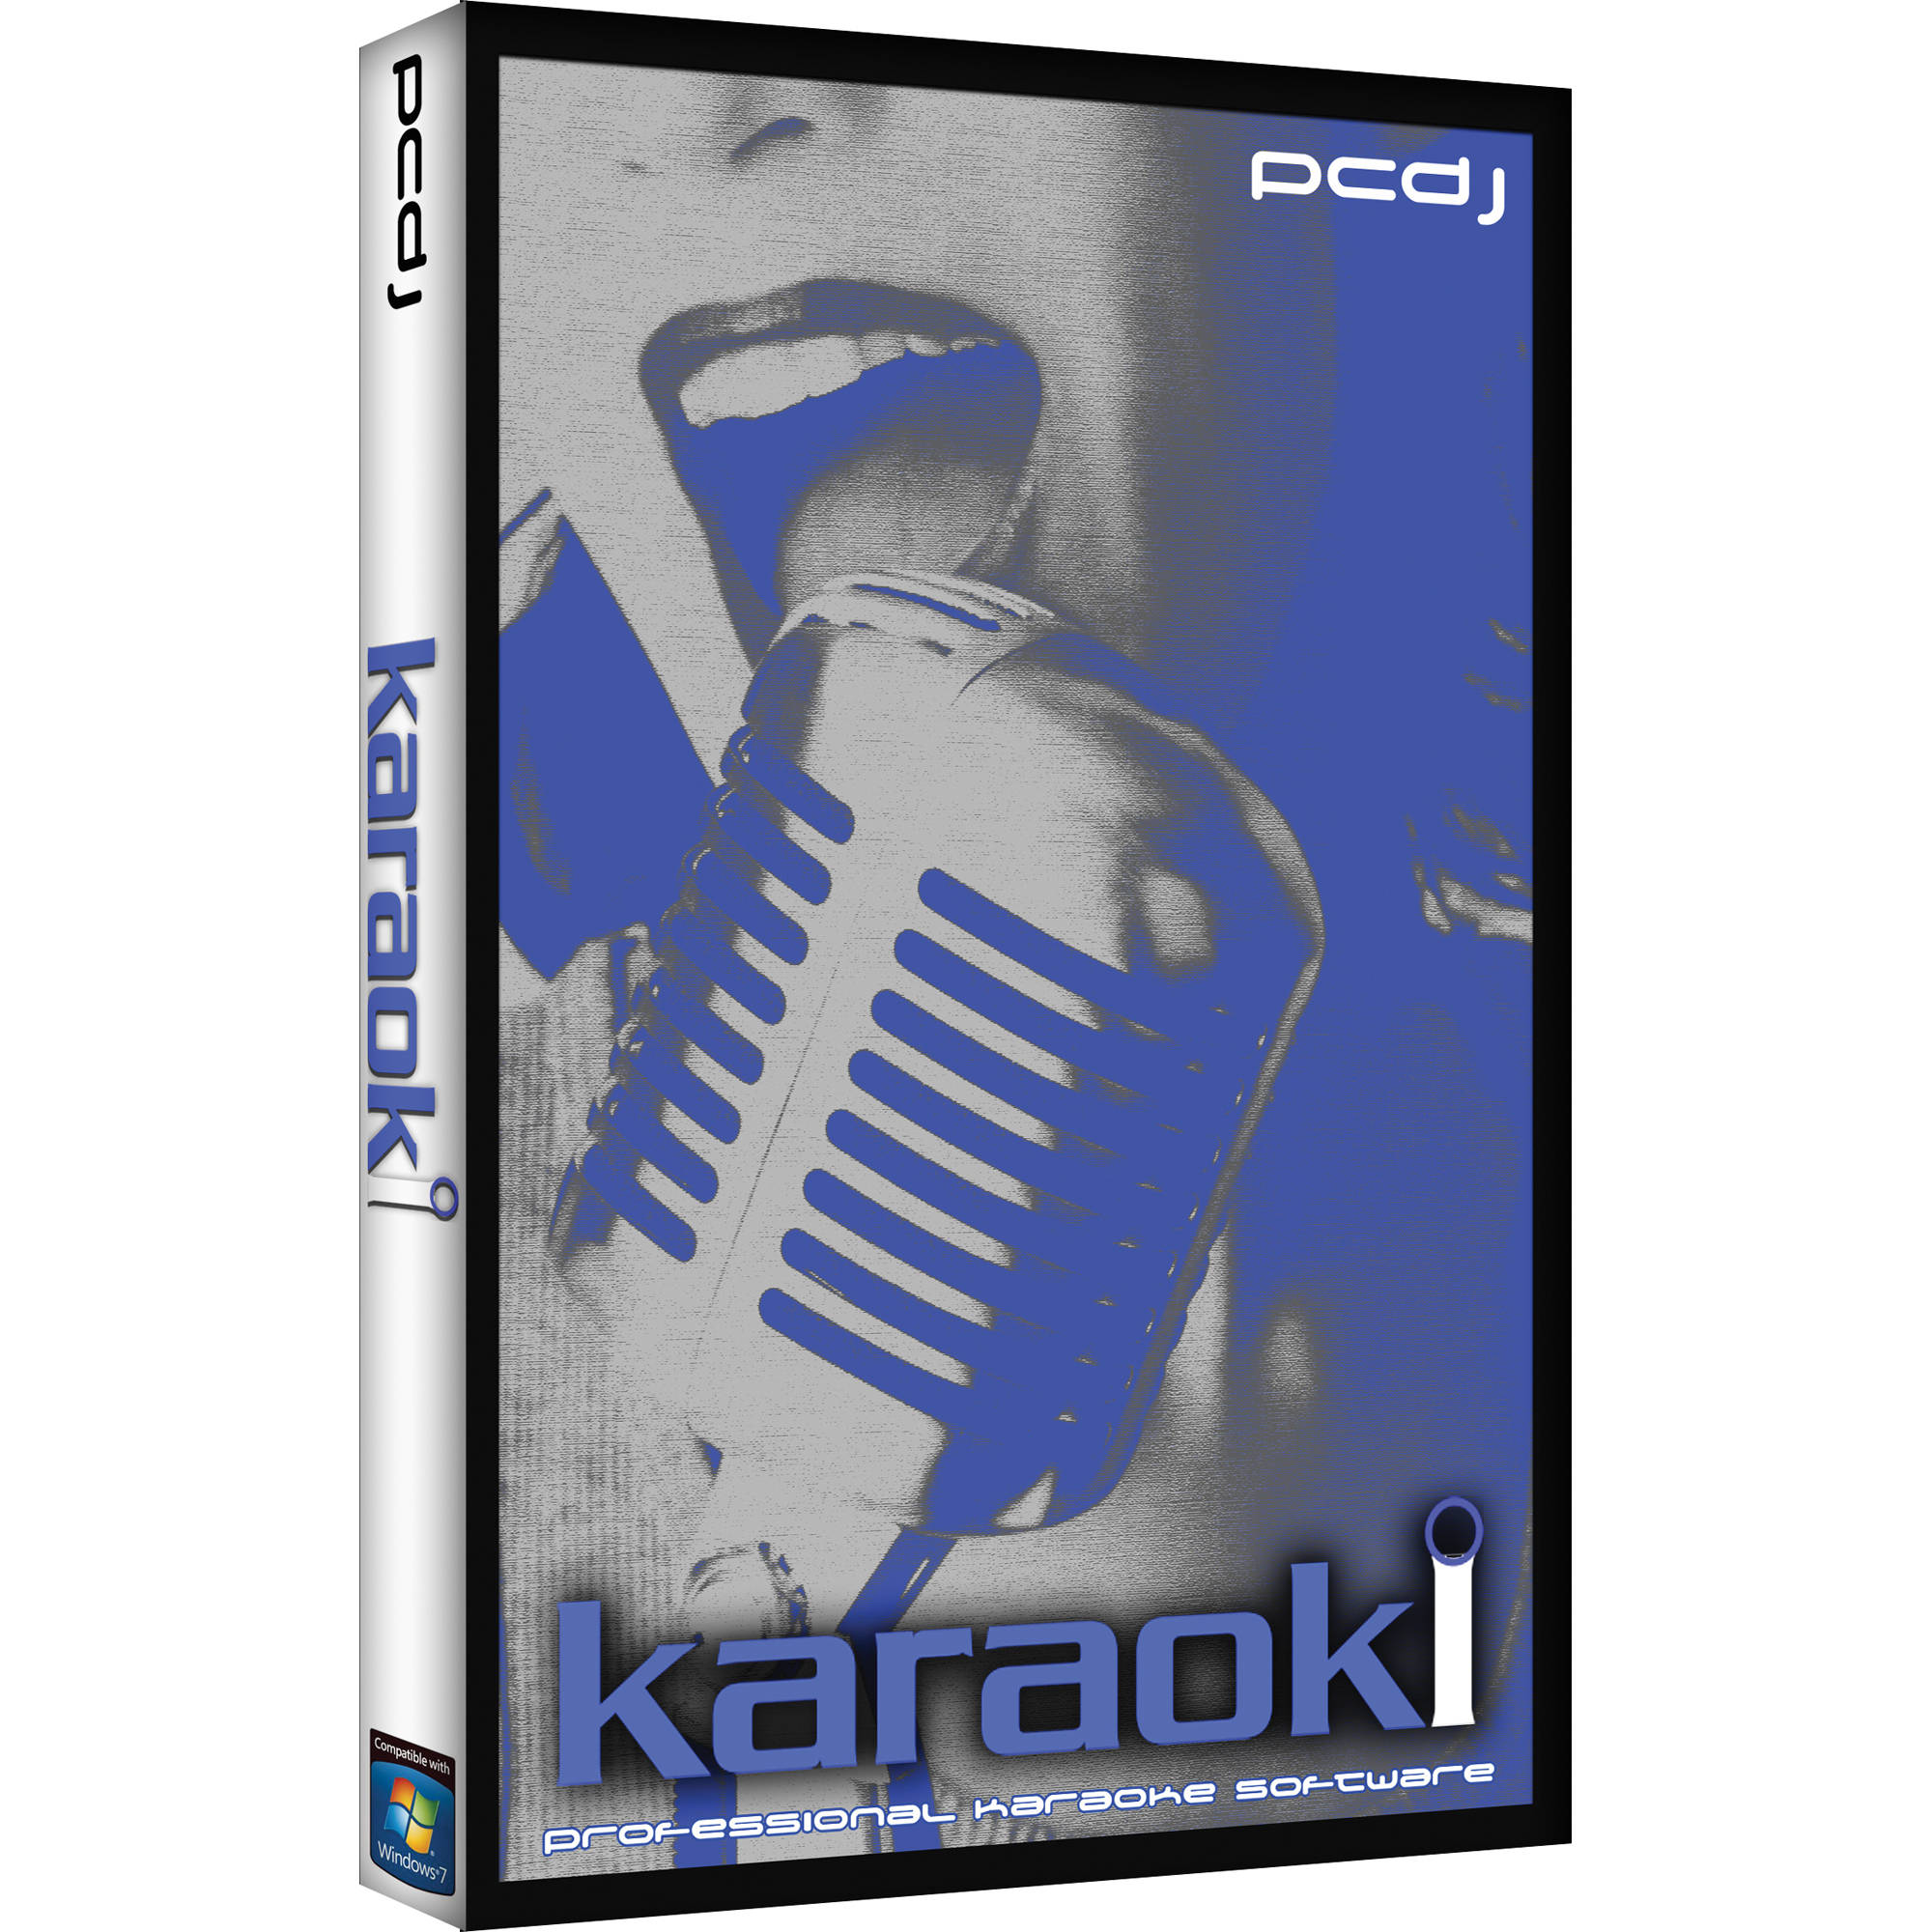 Pcdj vj karaoke free download